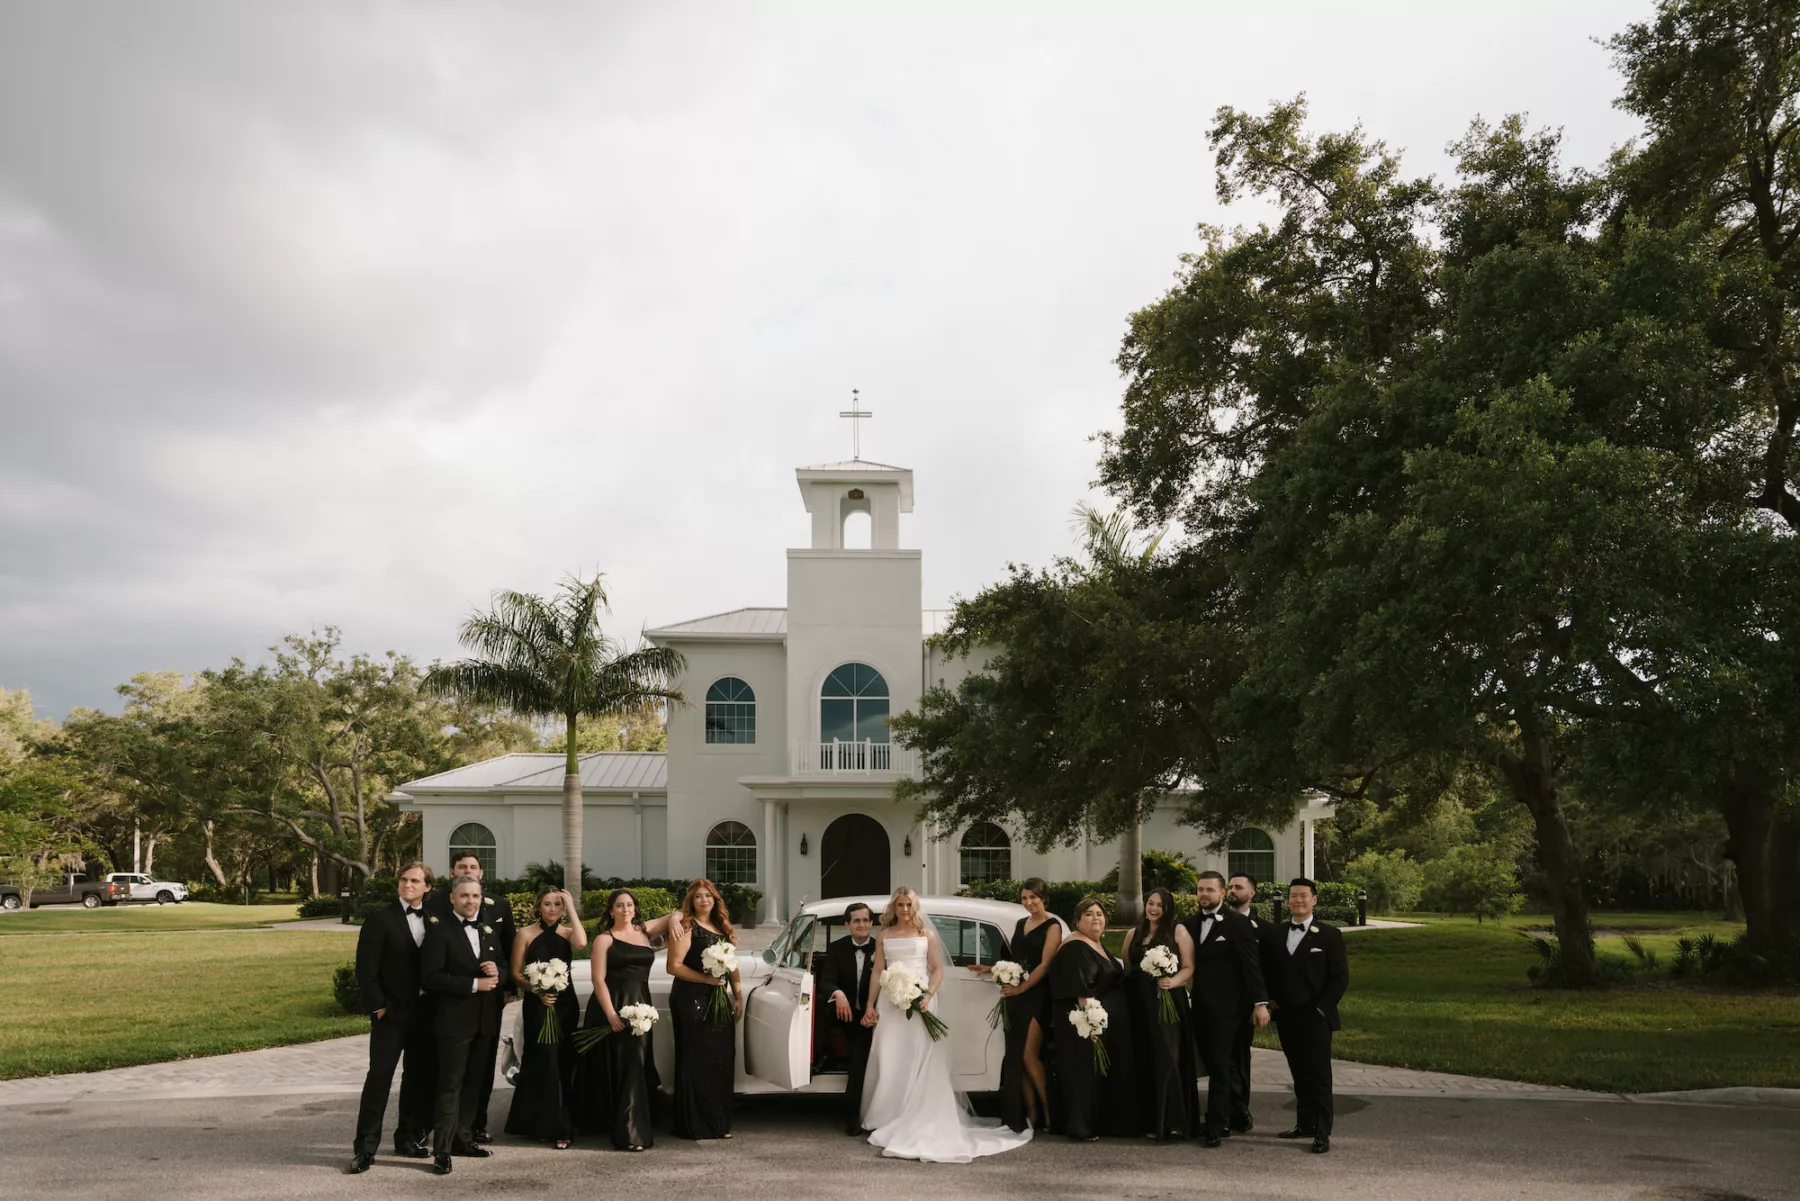 Tampa Bay Wedding Venue Harborside Chapel with Classic Rolls Royce Car Rental